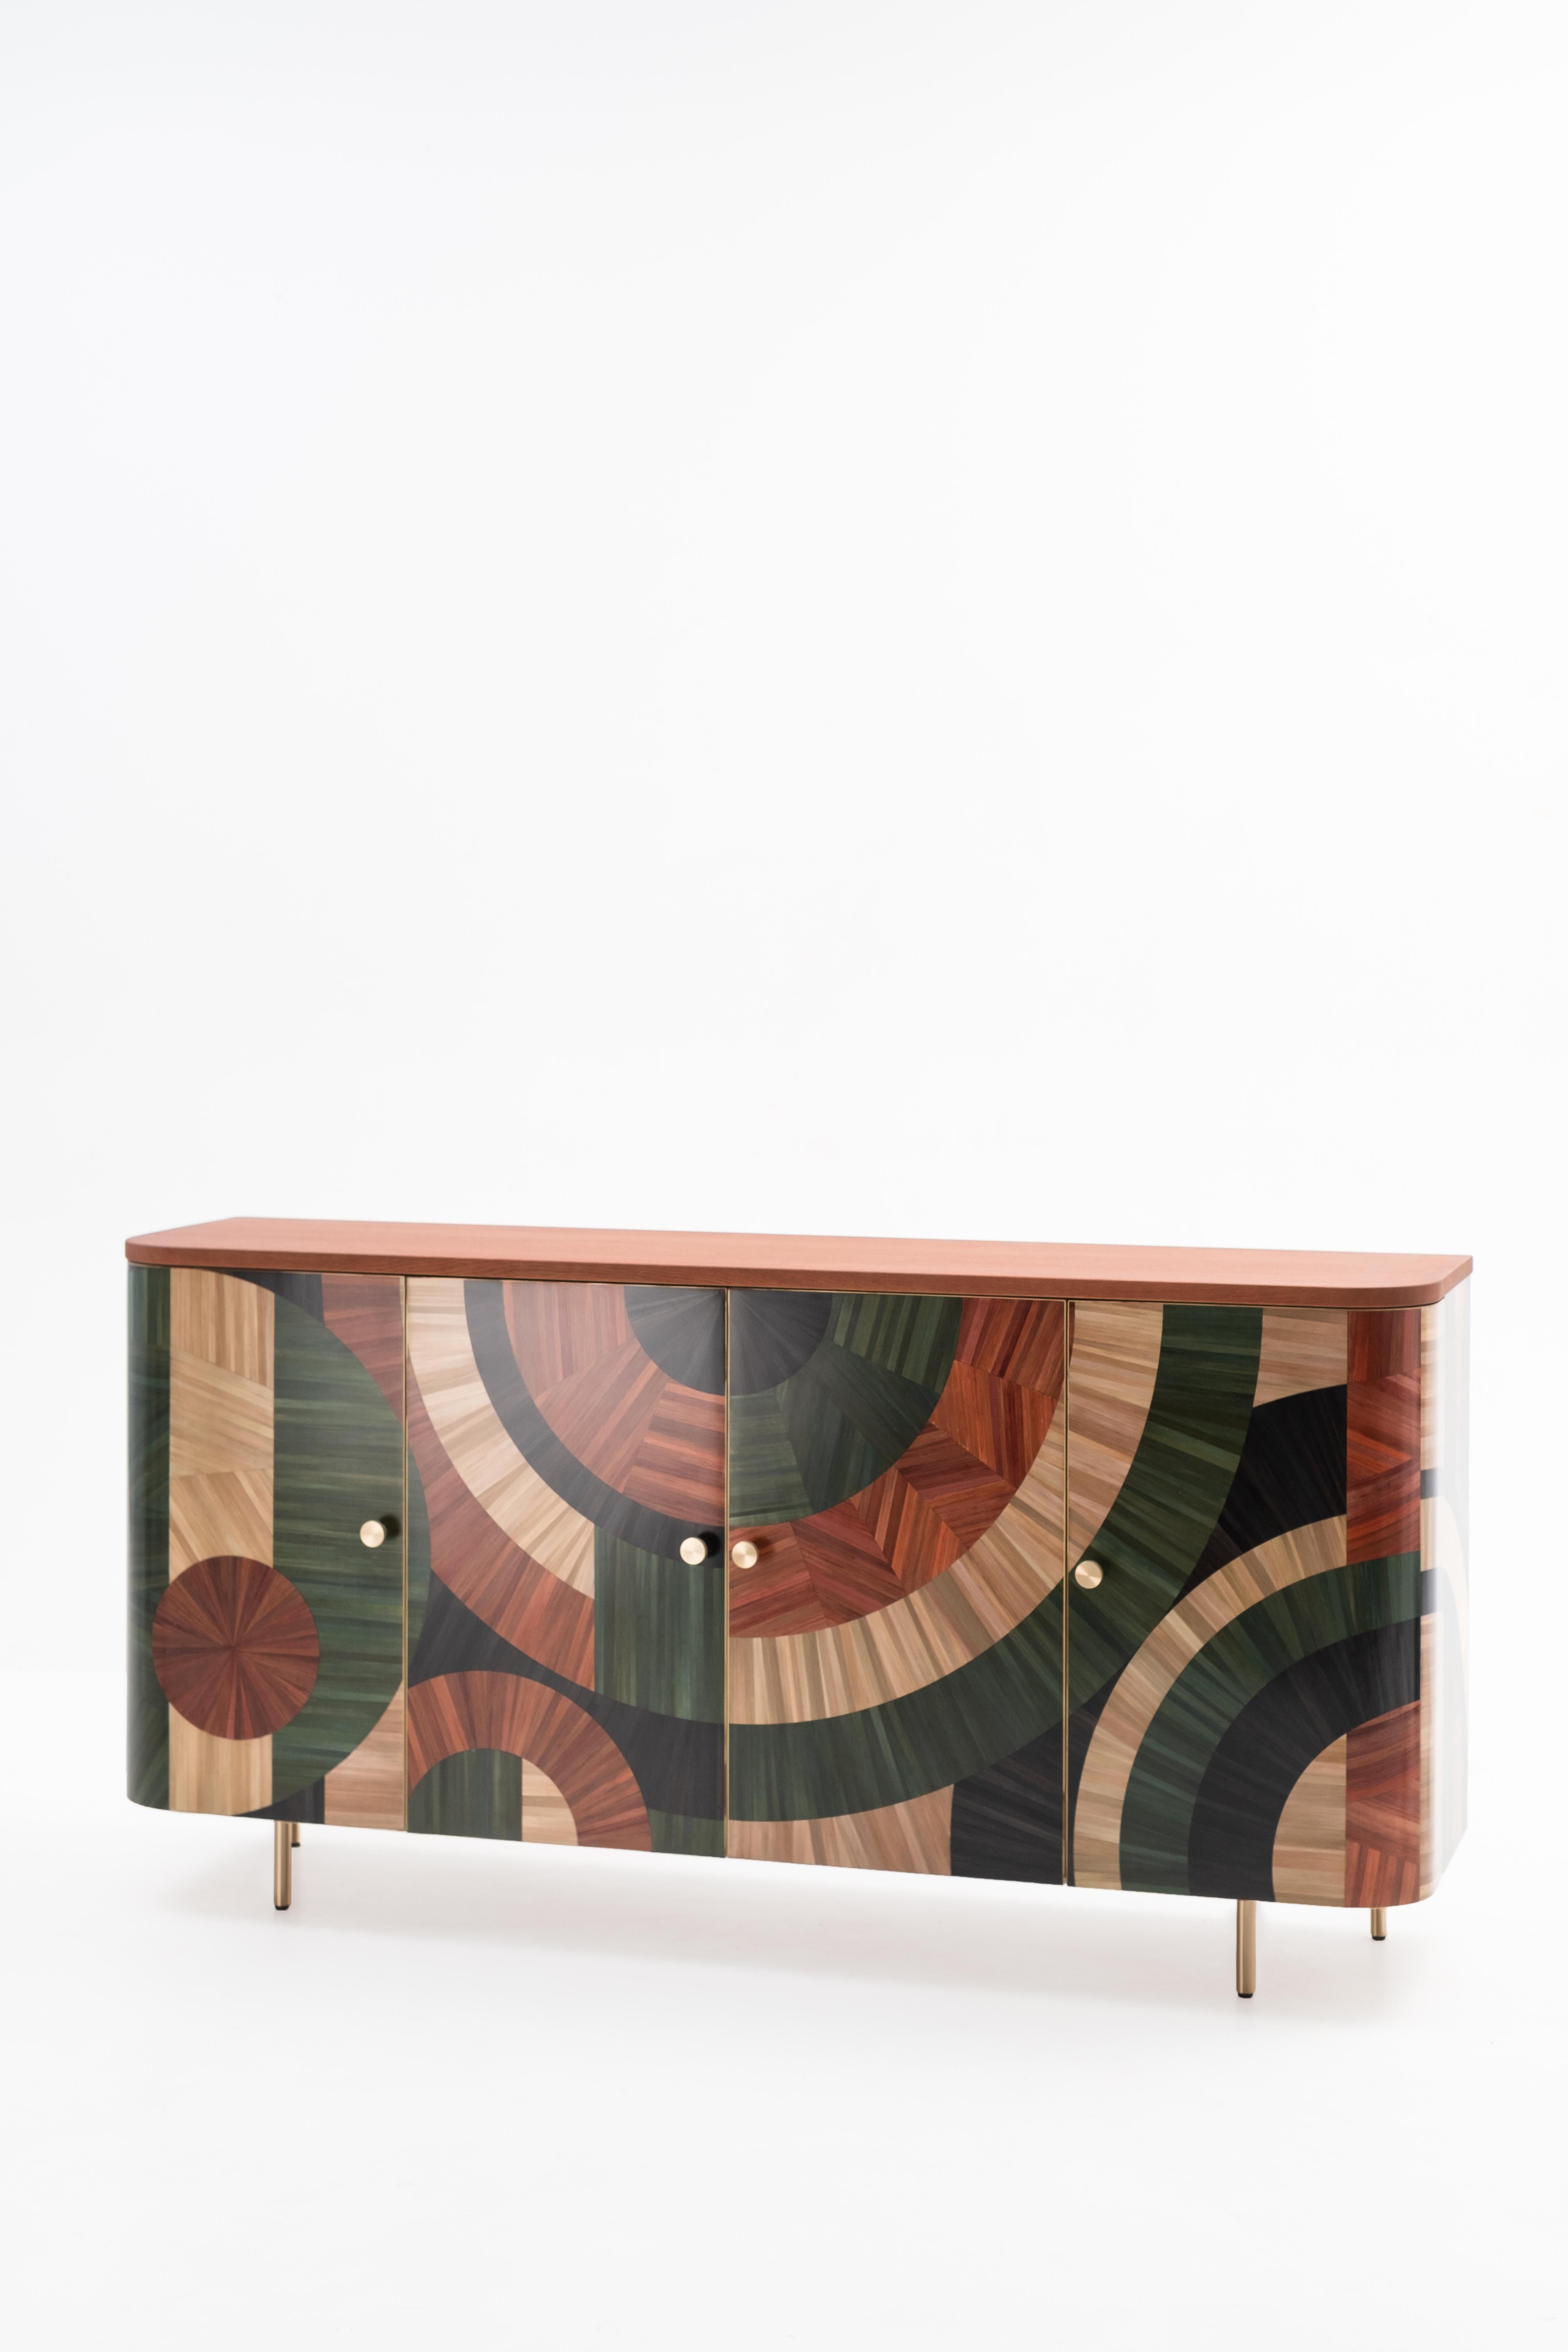 Solomia Straw Marquetry Art Deco Wood Cabinet Green Orange Black by RUDA Studio For Sale 7